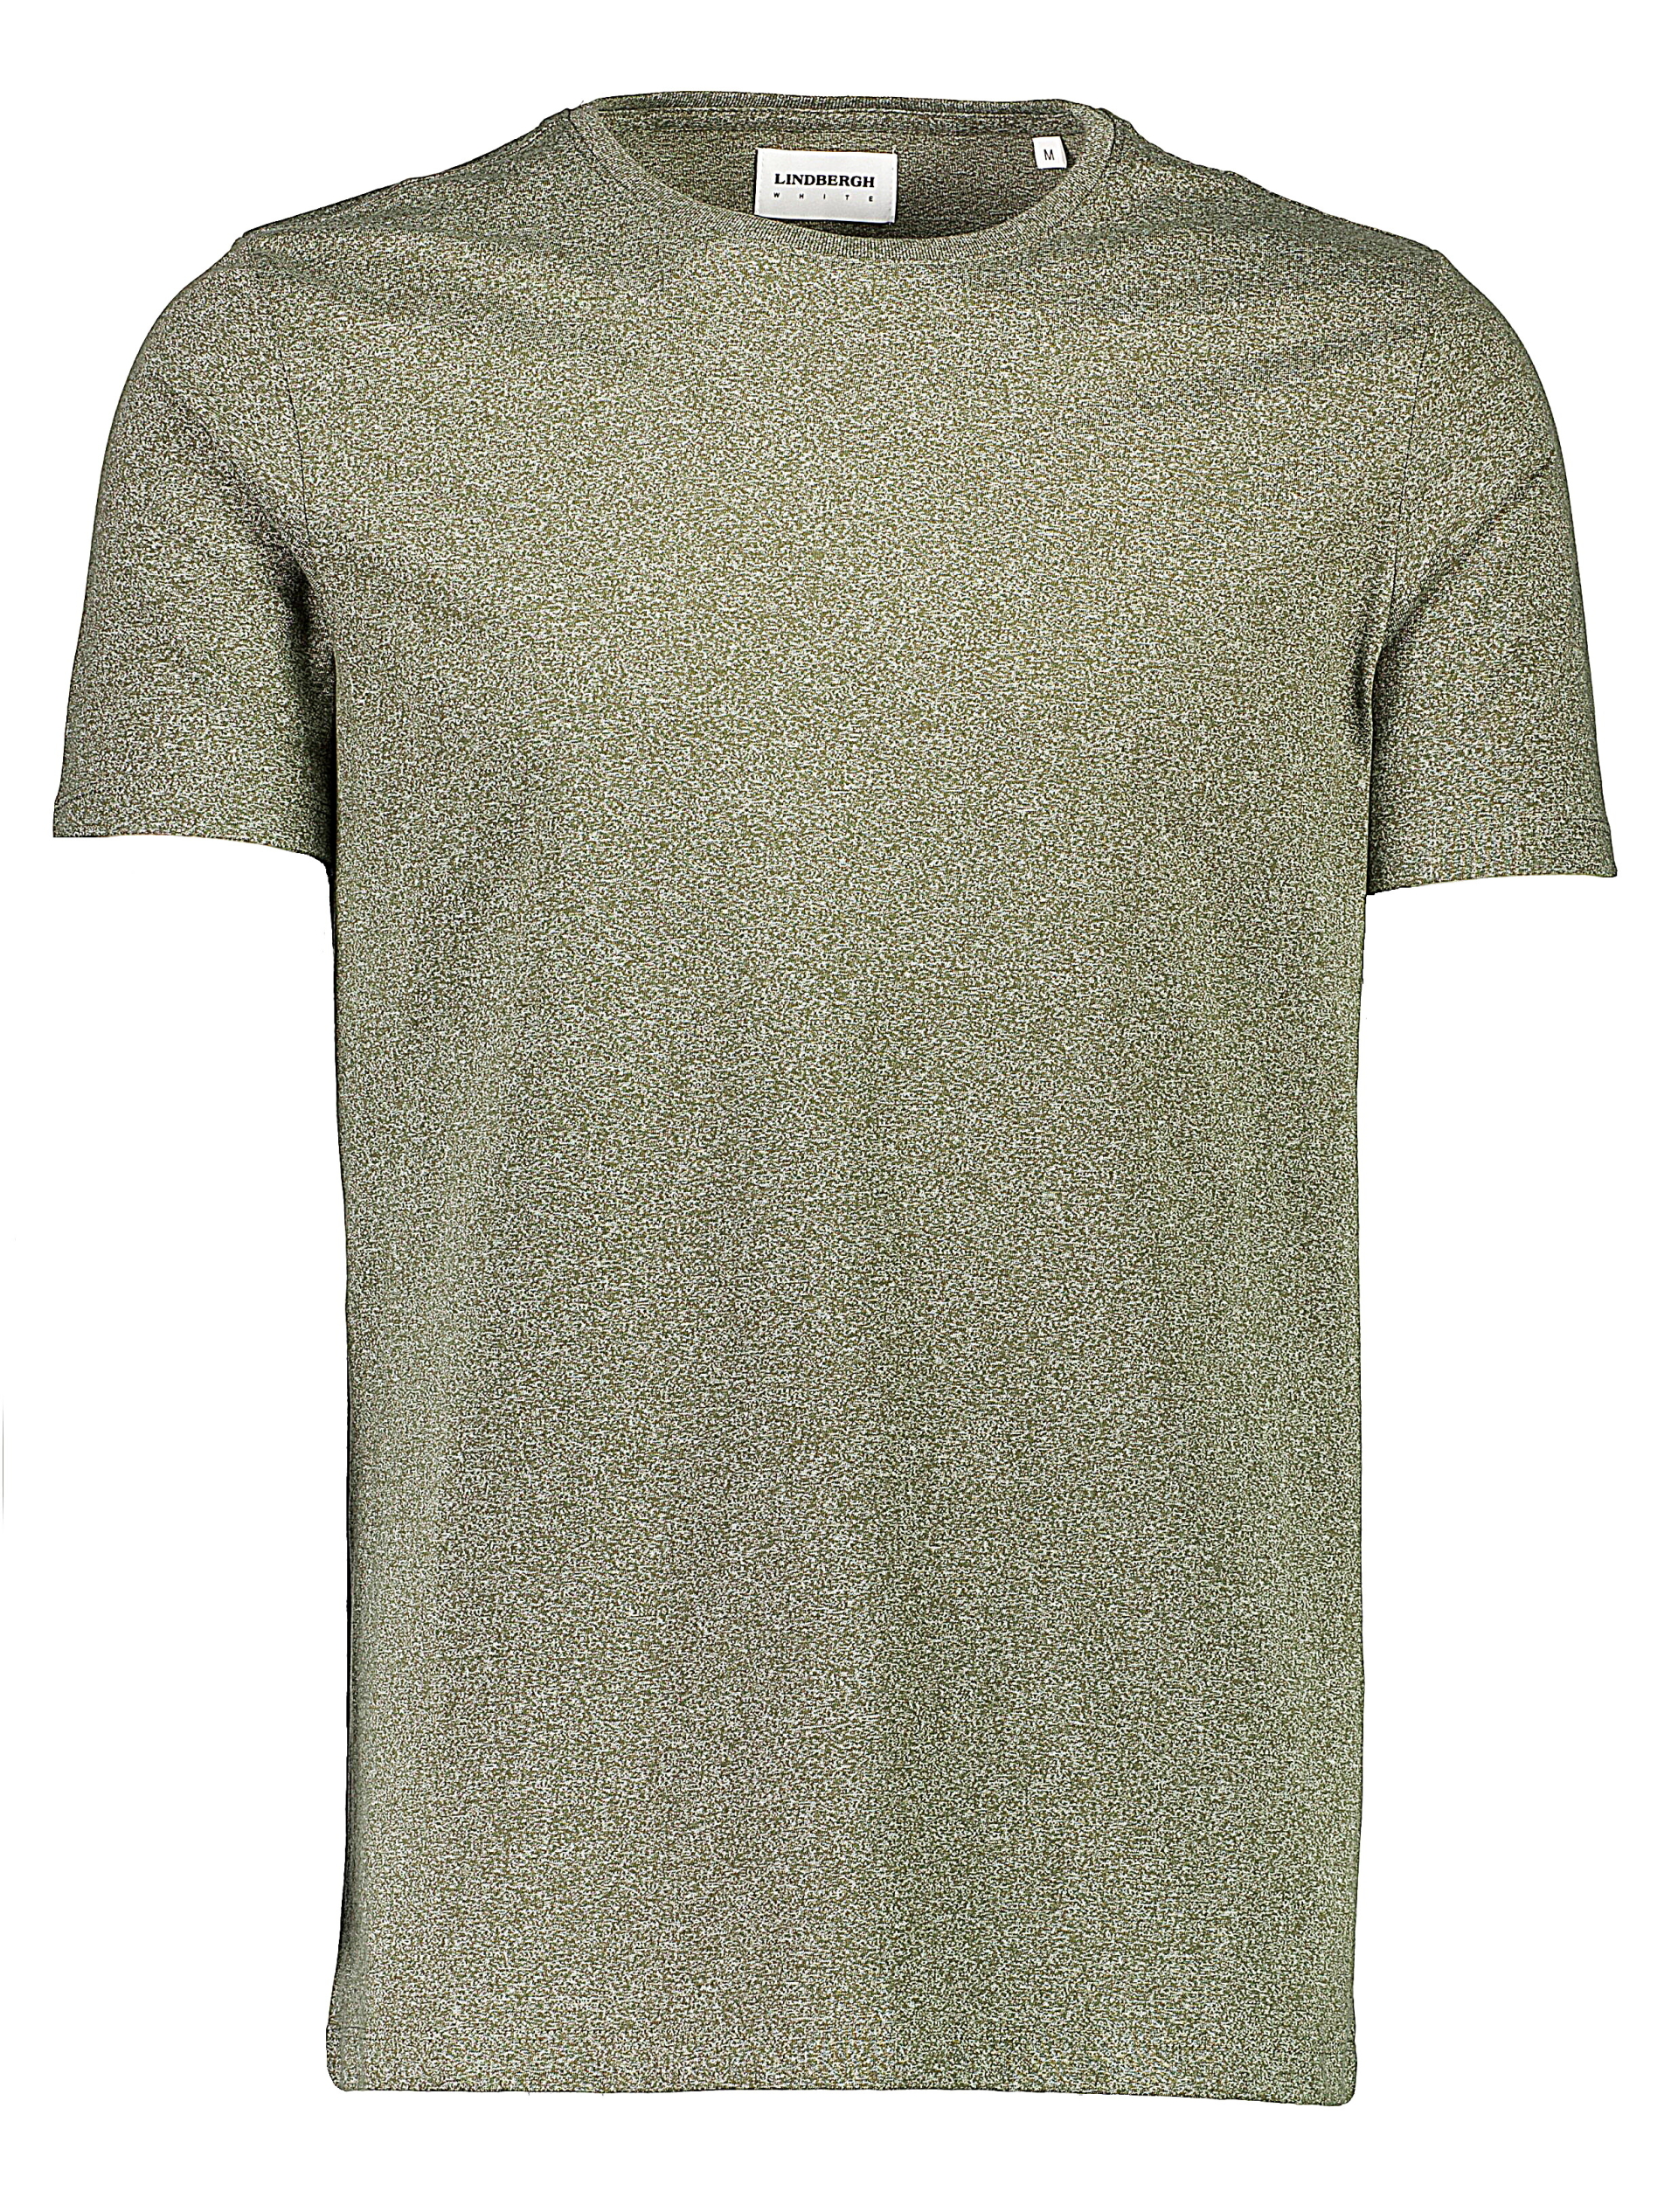 Lindbergh T-Shirt grün / deep army mix